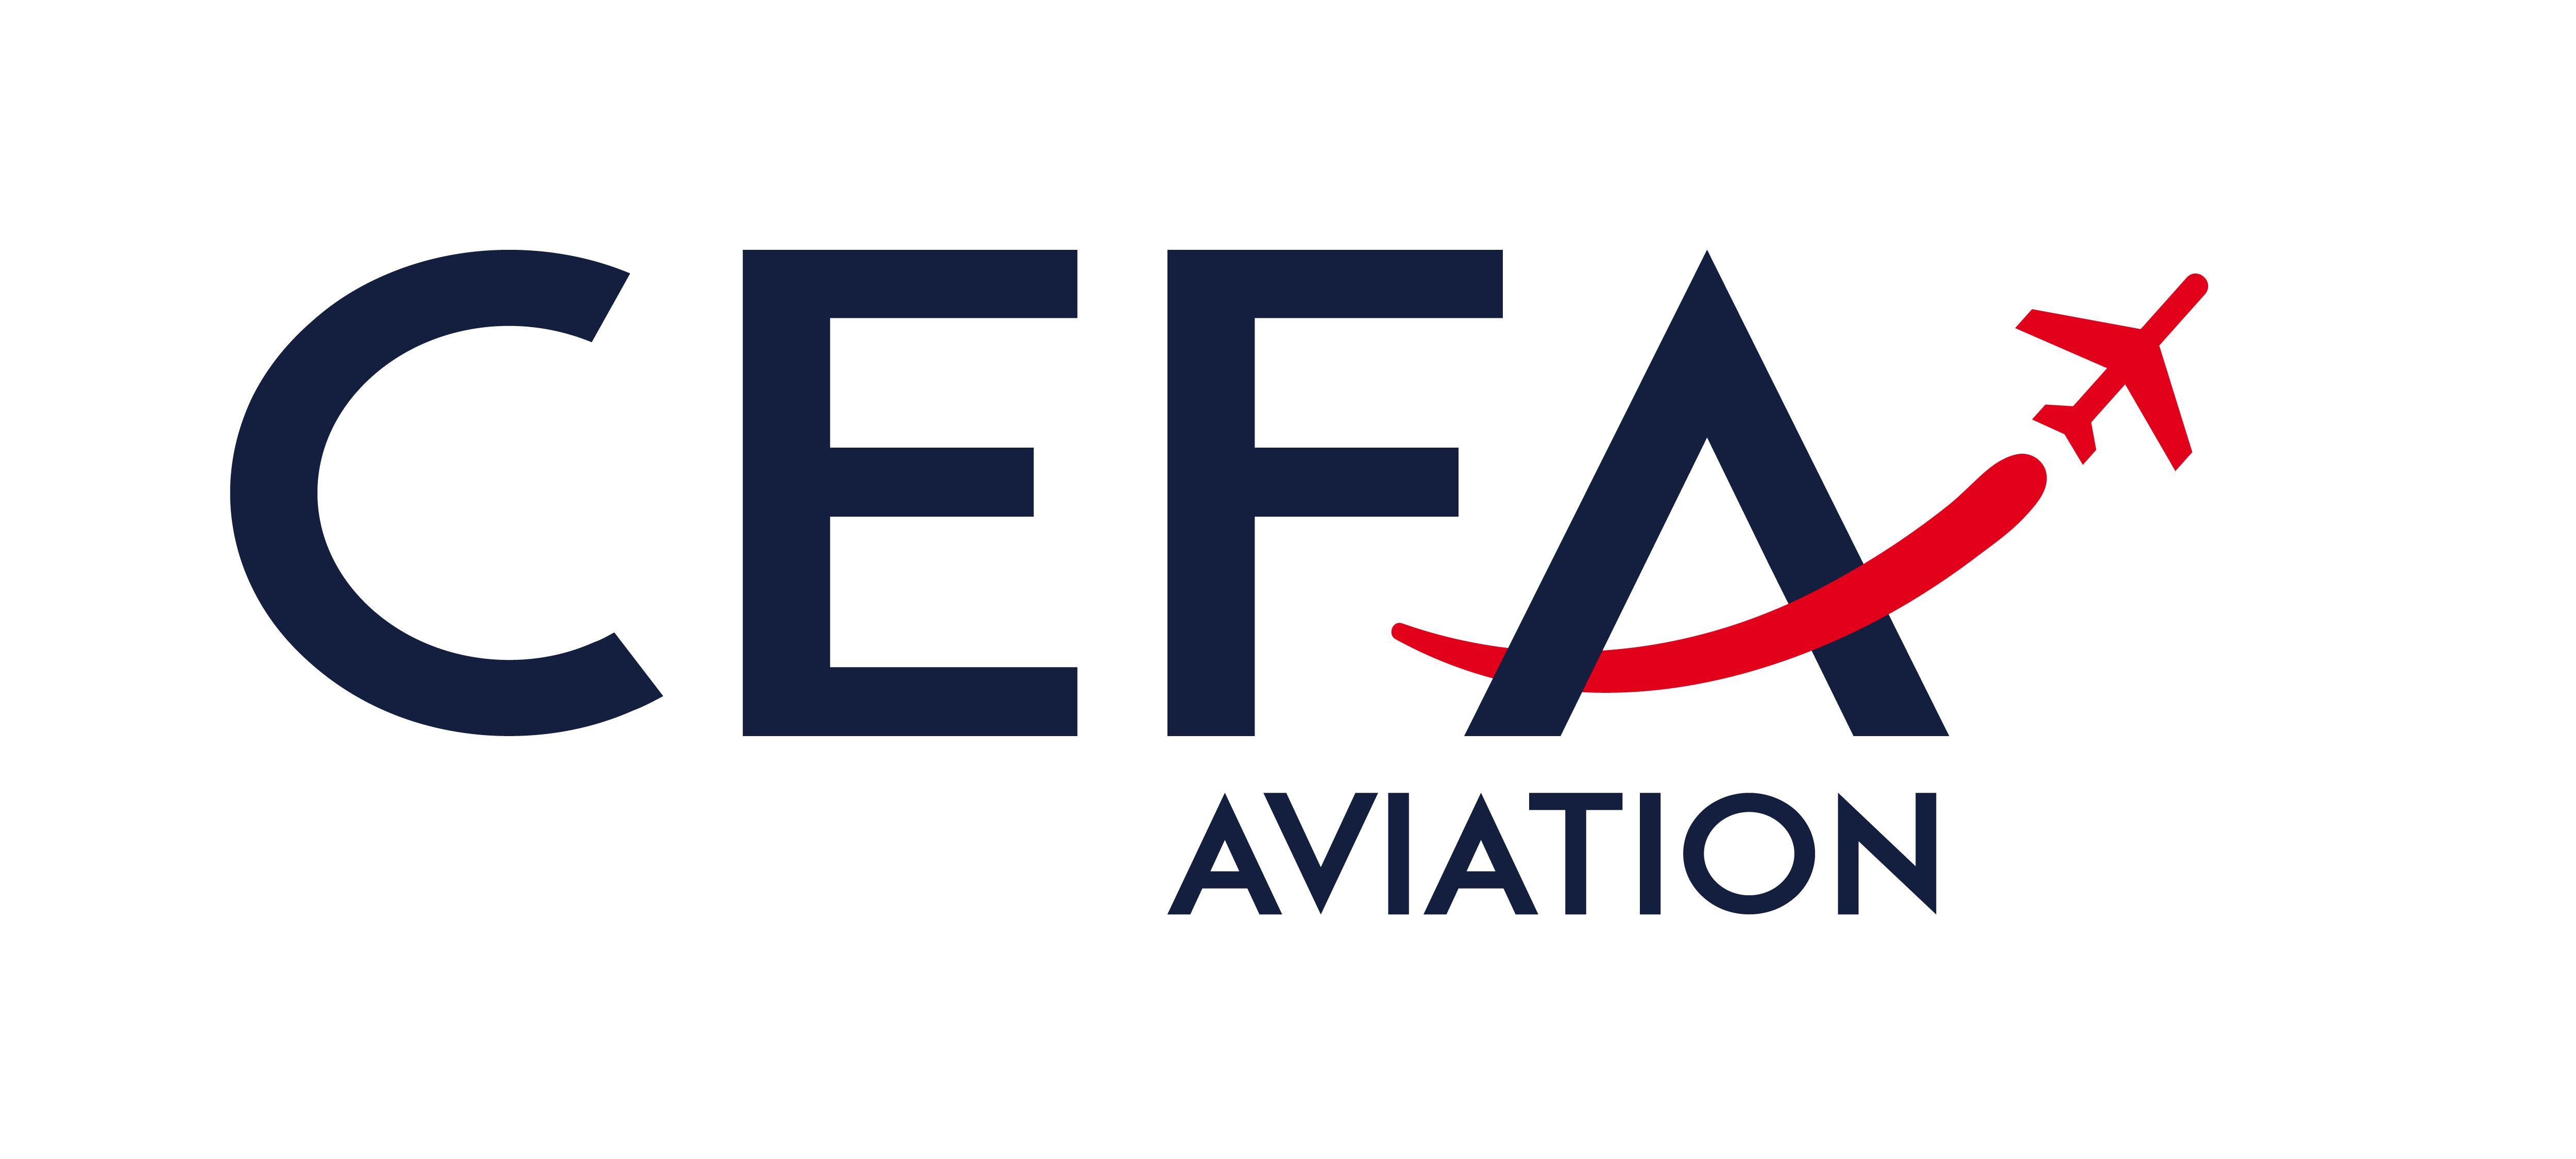 GE Aviation Logo - CEFA Aviation&GE partner in Flight Analysis & Animation